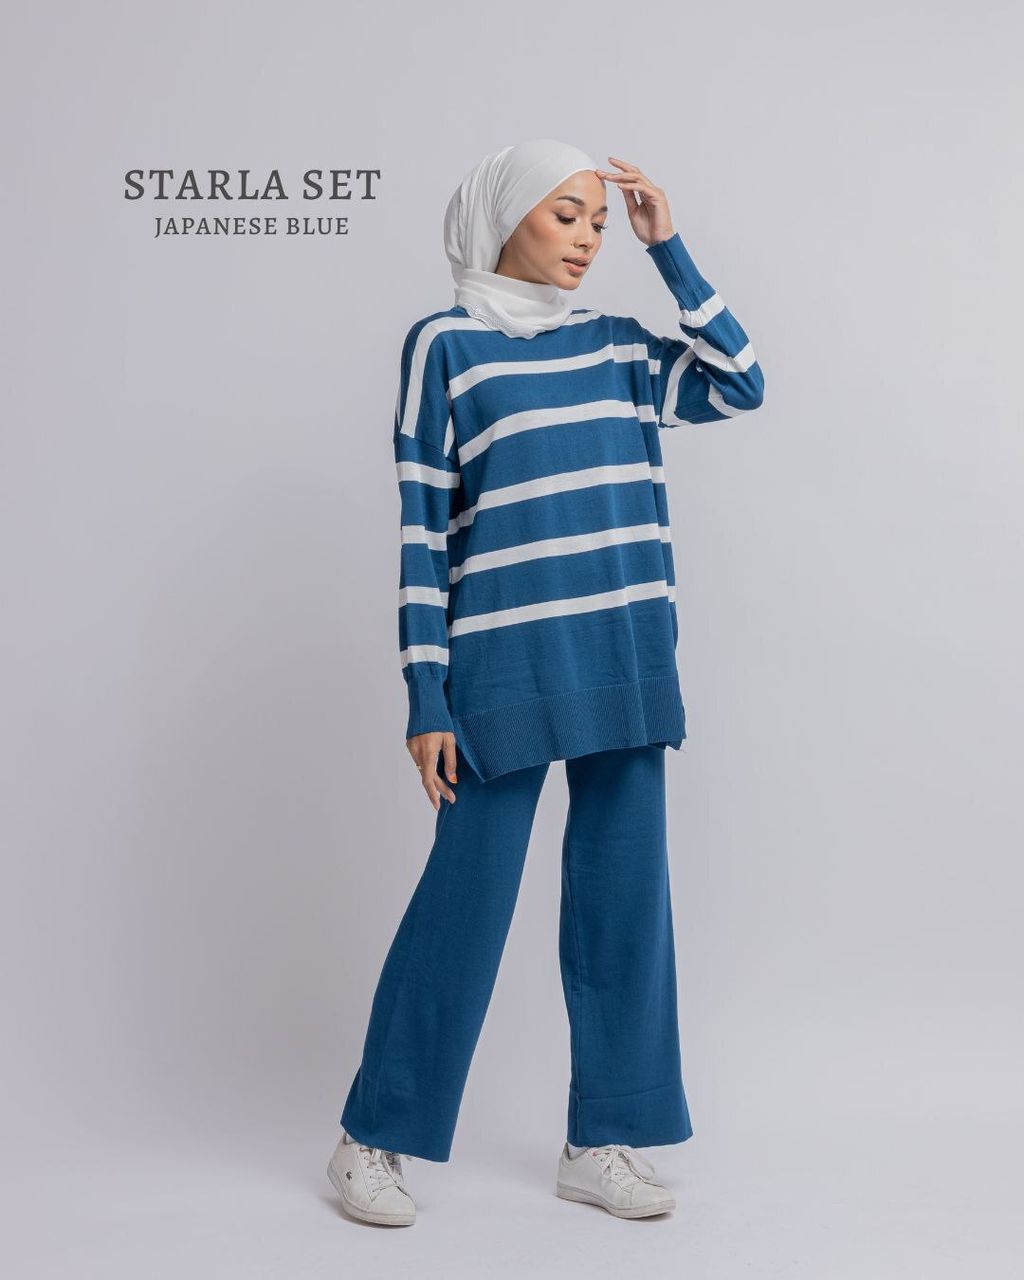 haura-wear-cotton-baju-muslimah-set-seluar-suit-muslimah-set-baju-dan-seluar-muslimah-palazzo (24)